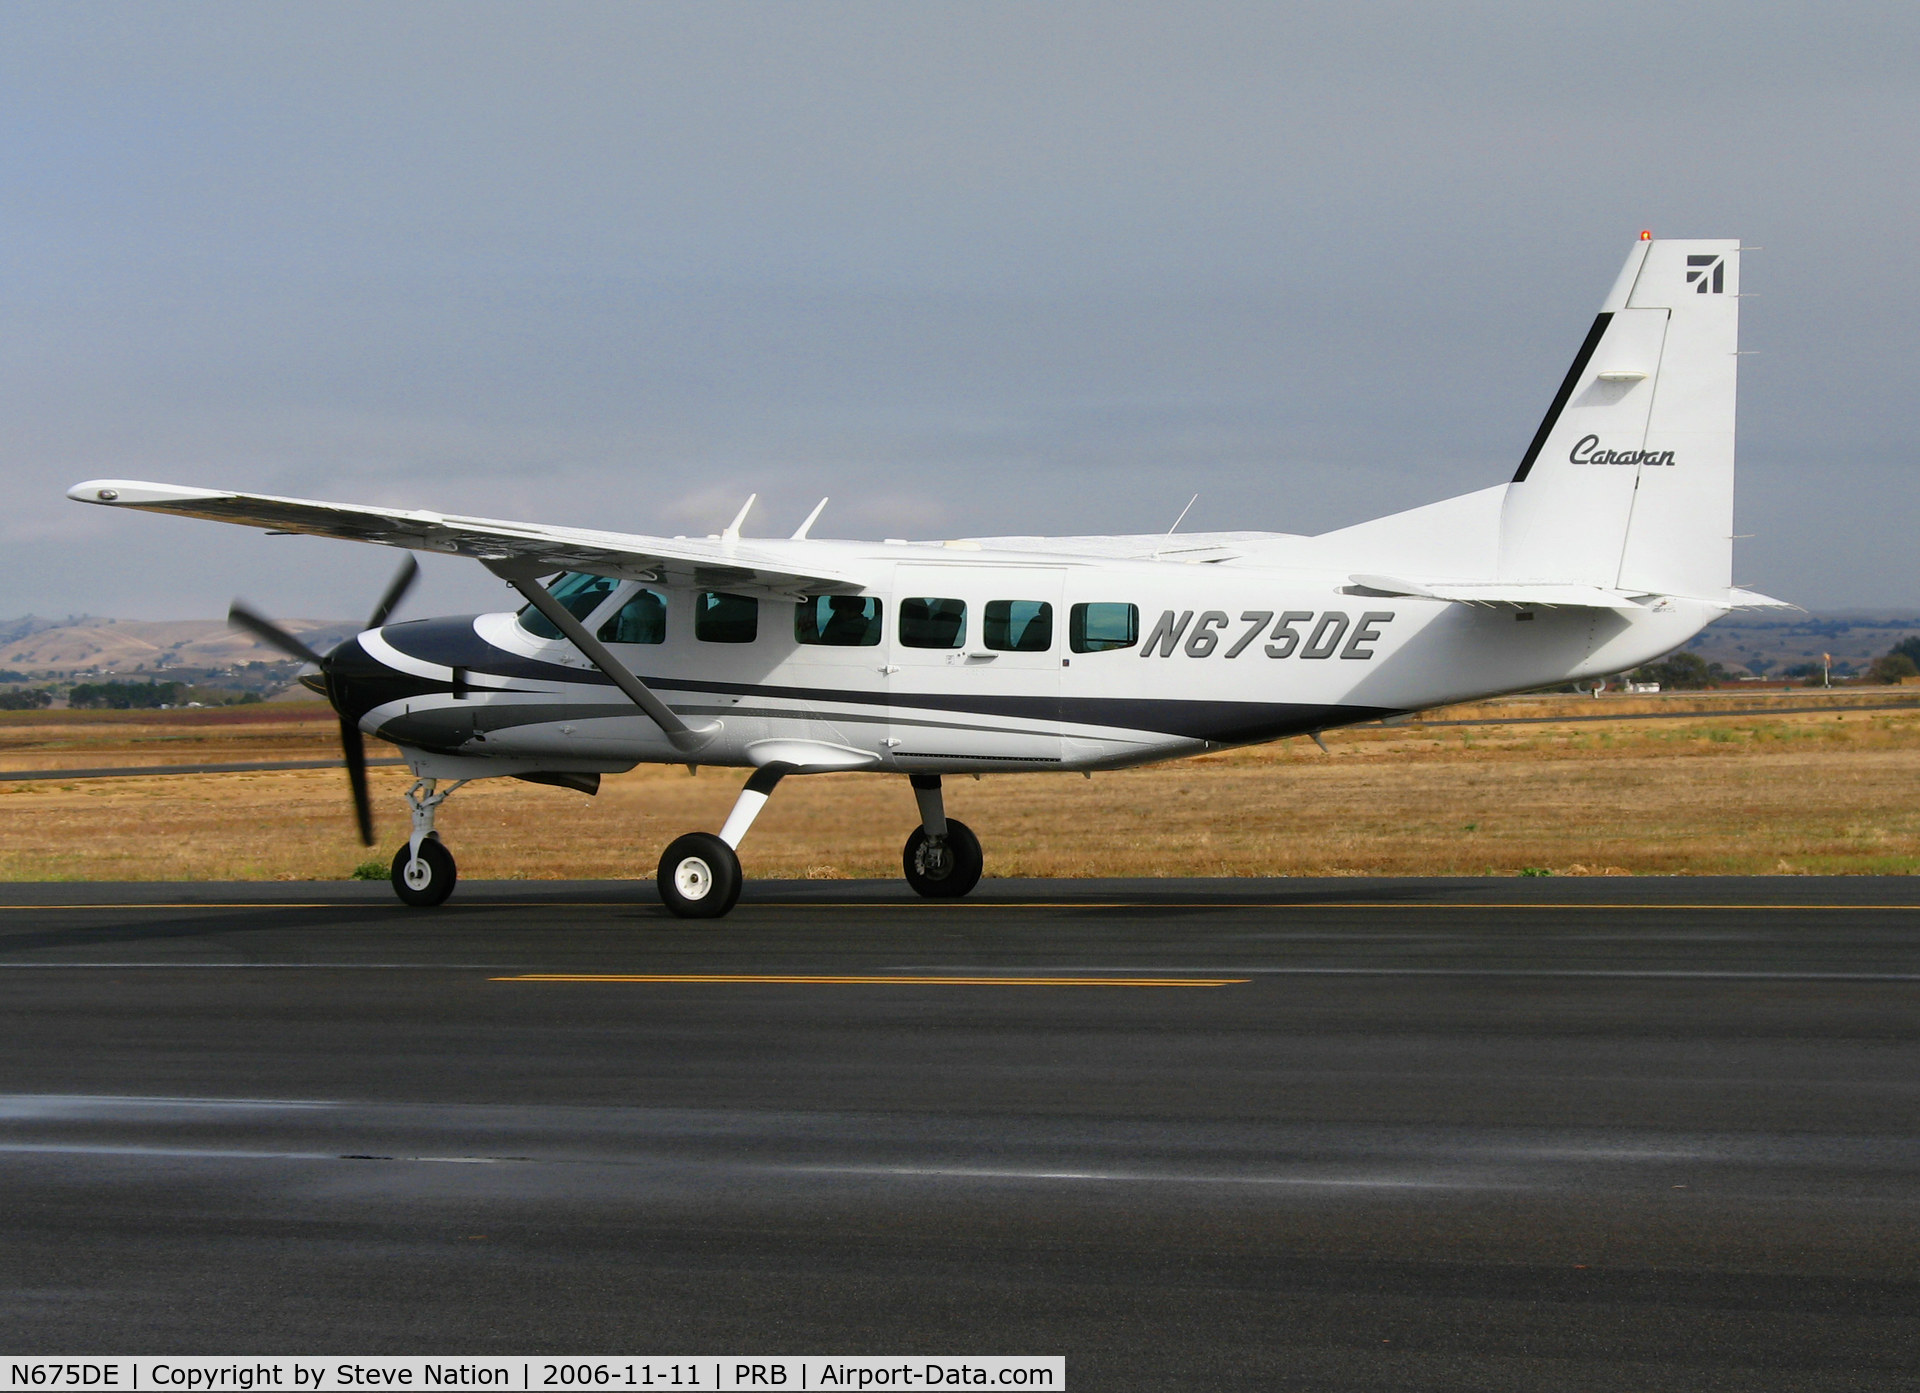 N675DE, 2003 Cessna 208 Caravan I C/N 20800366, Dewey Enterprises 2003 Cessna 208 Caravan taxying for take-off @ Paso Robles Municipal Airport, CA